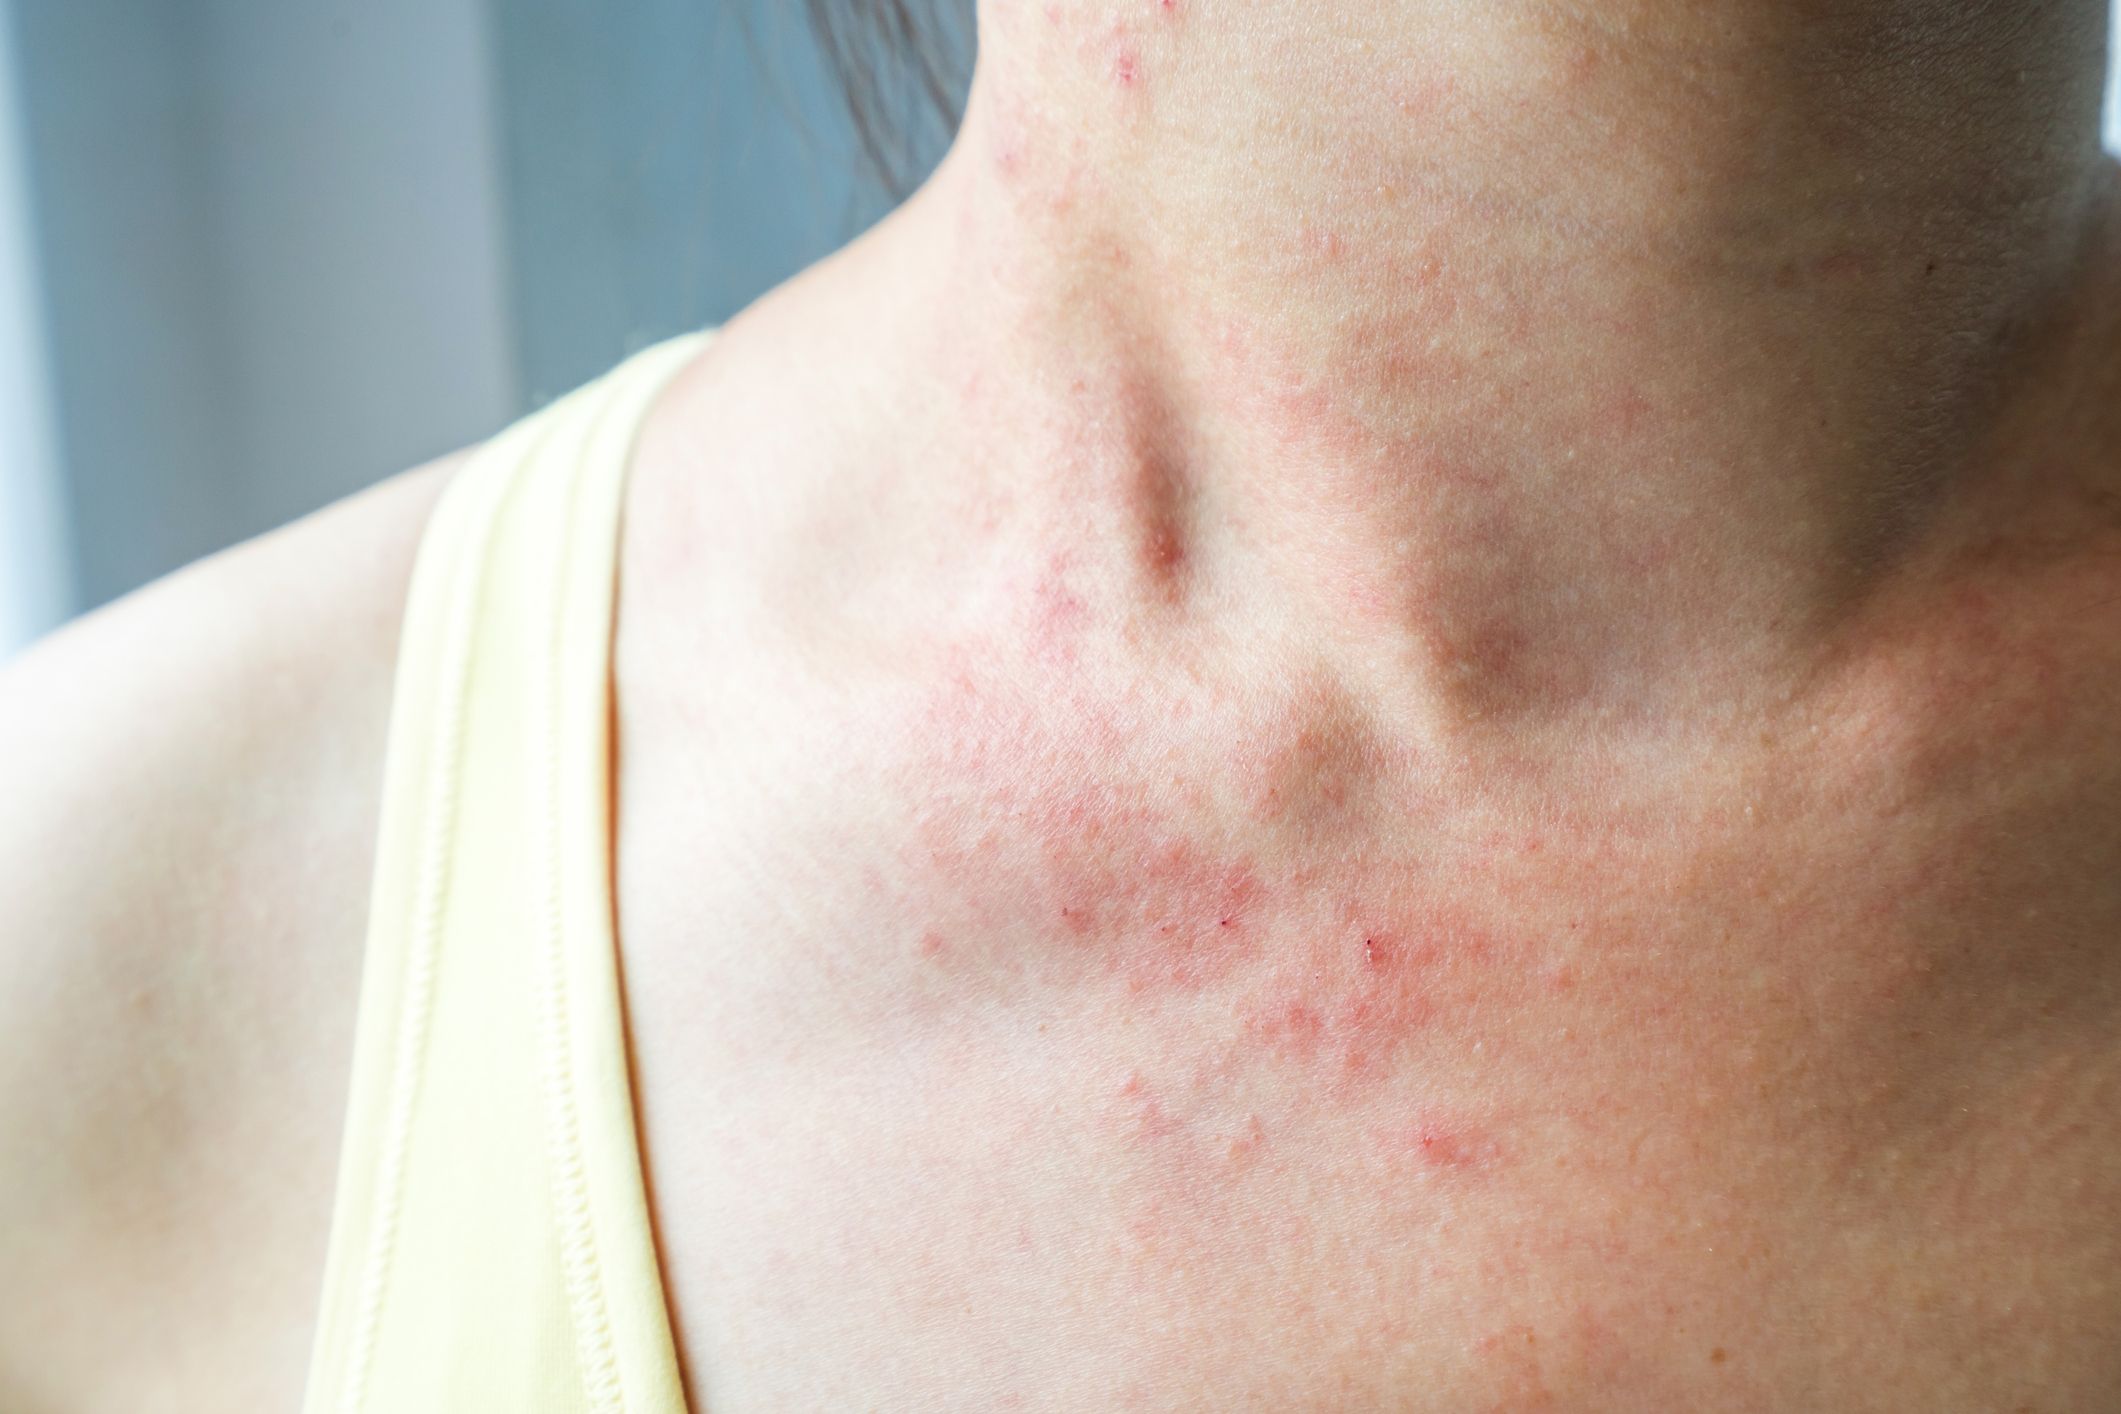 a Skin Rash May Be a Symptom, According to Doctors